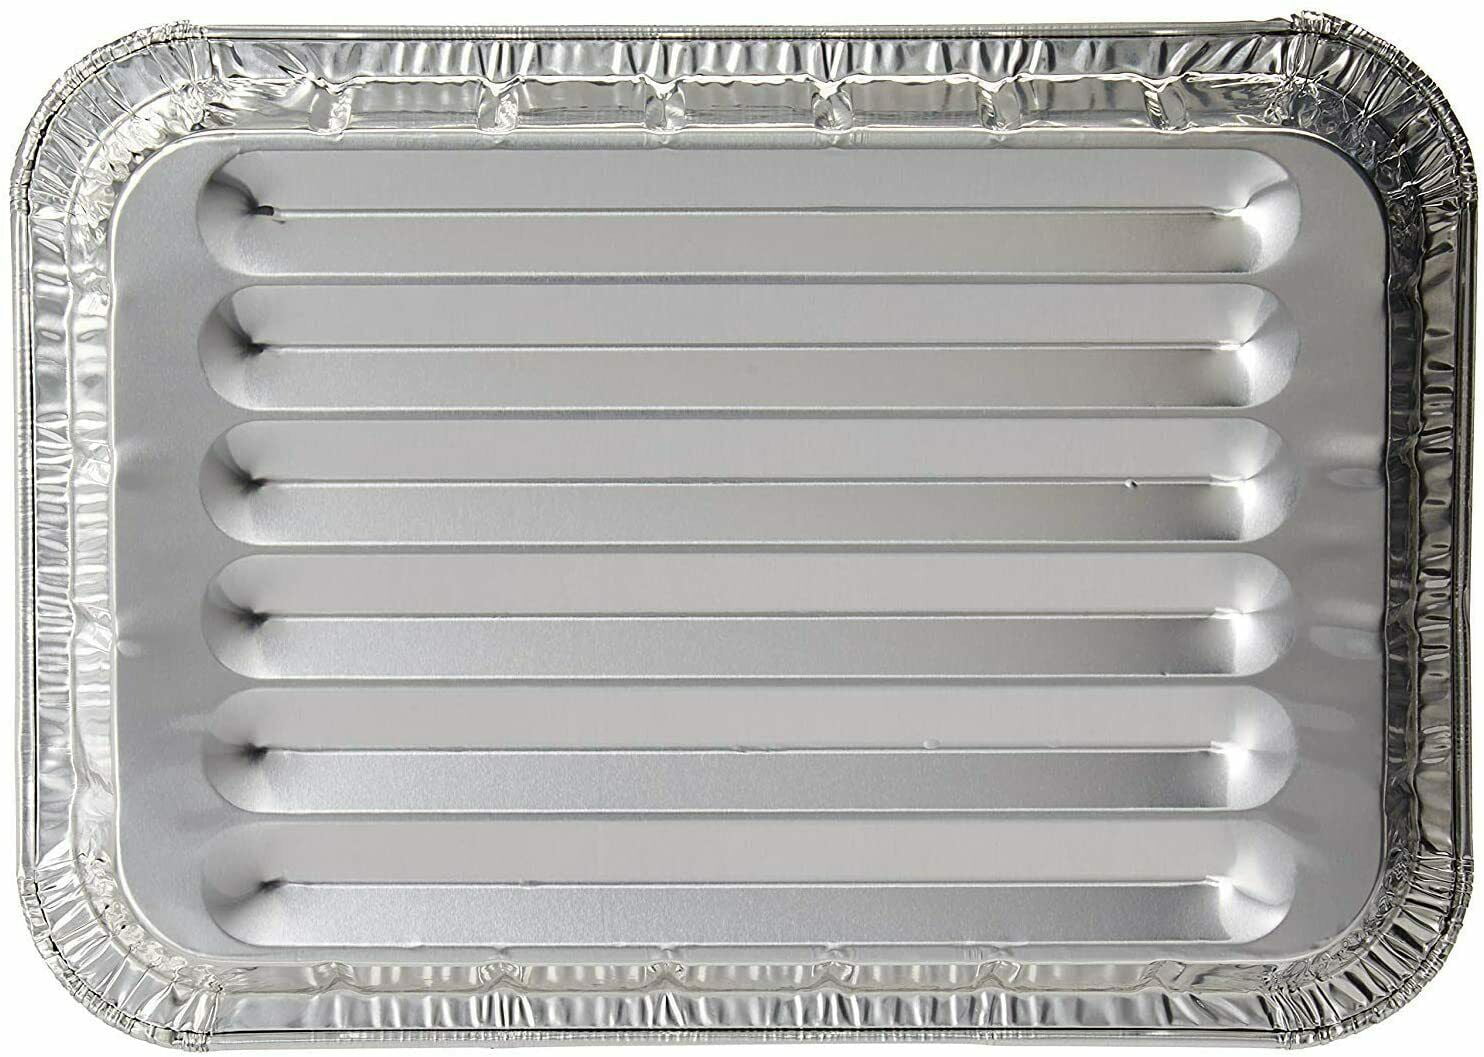 Small Broiler Disposable Aluminum Baking Pan 9 X 6 X 1.33 - 500 10% off